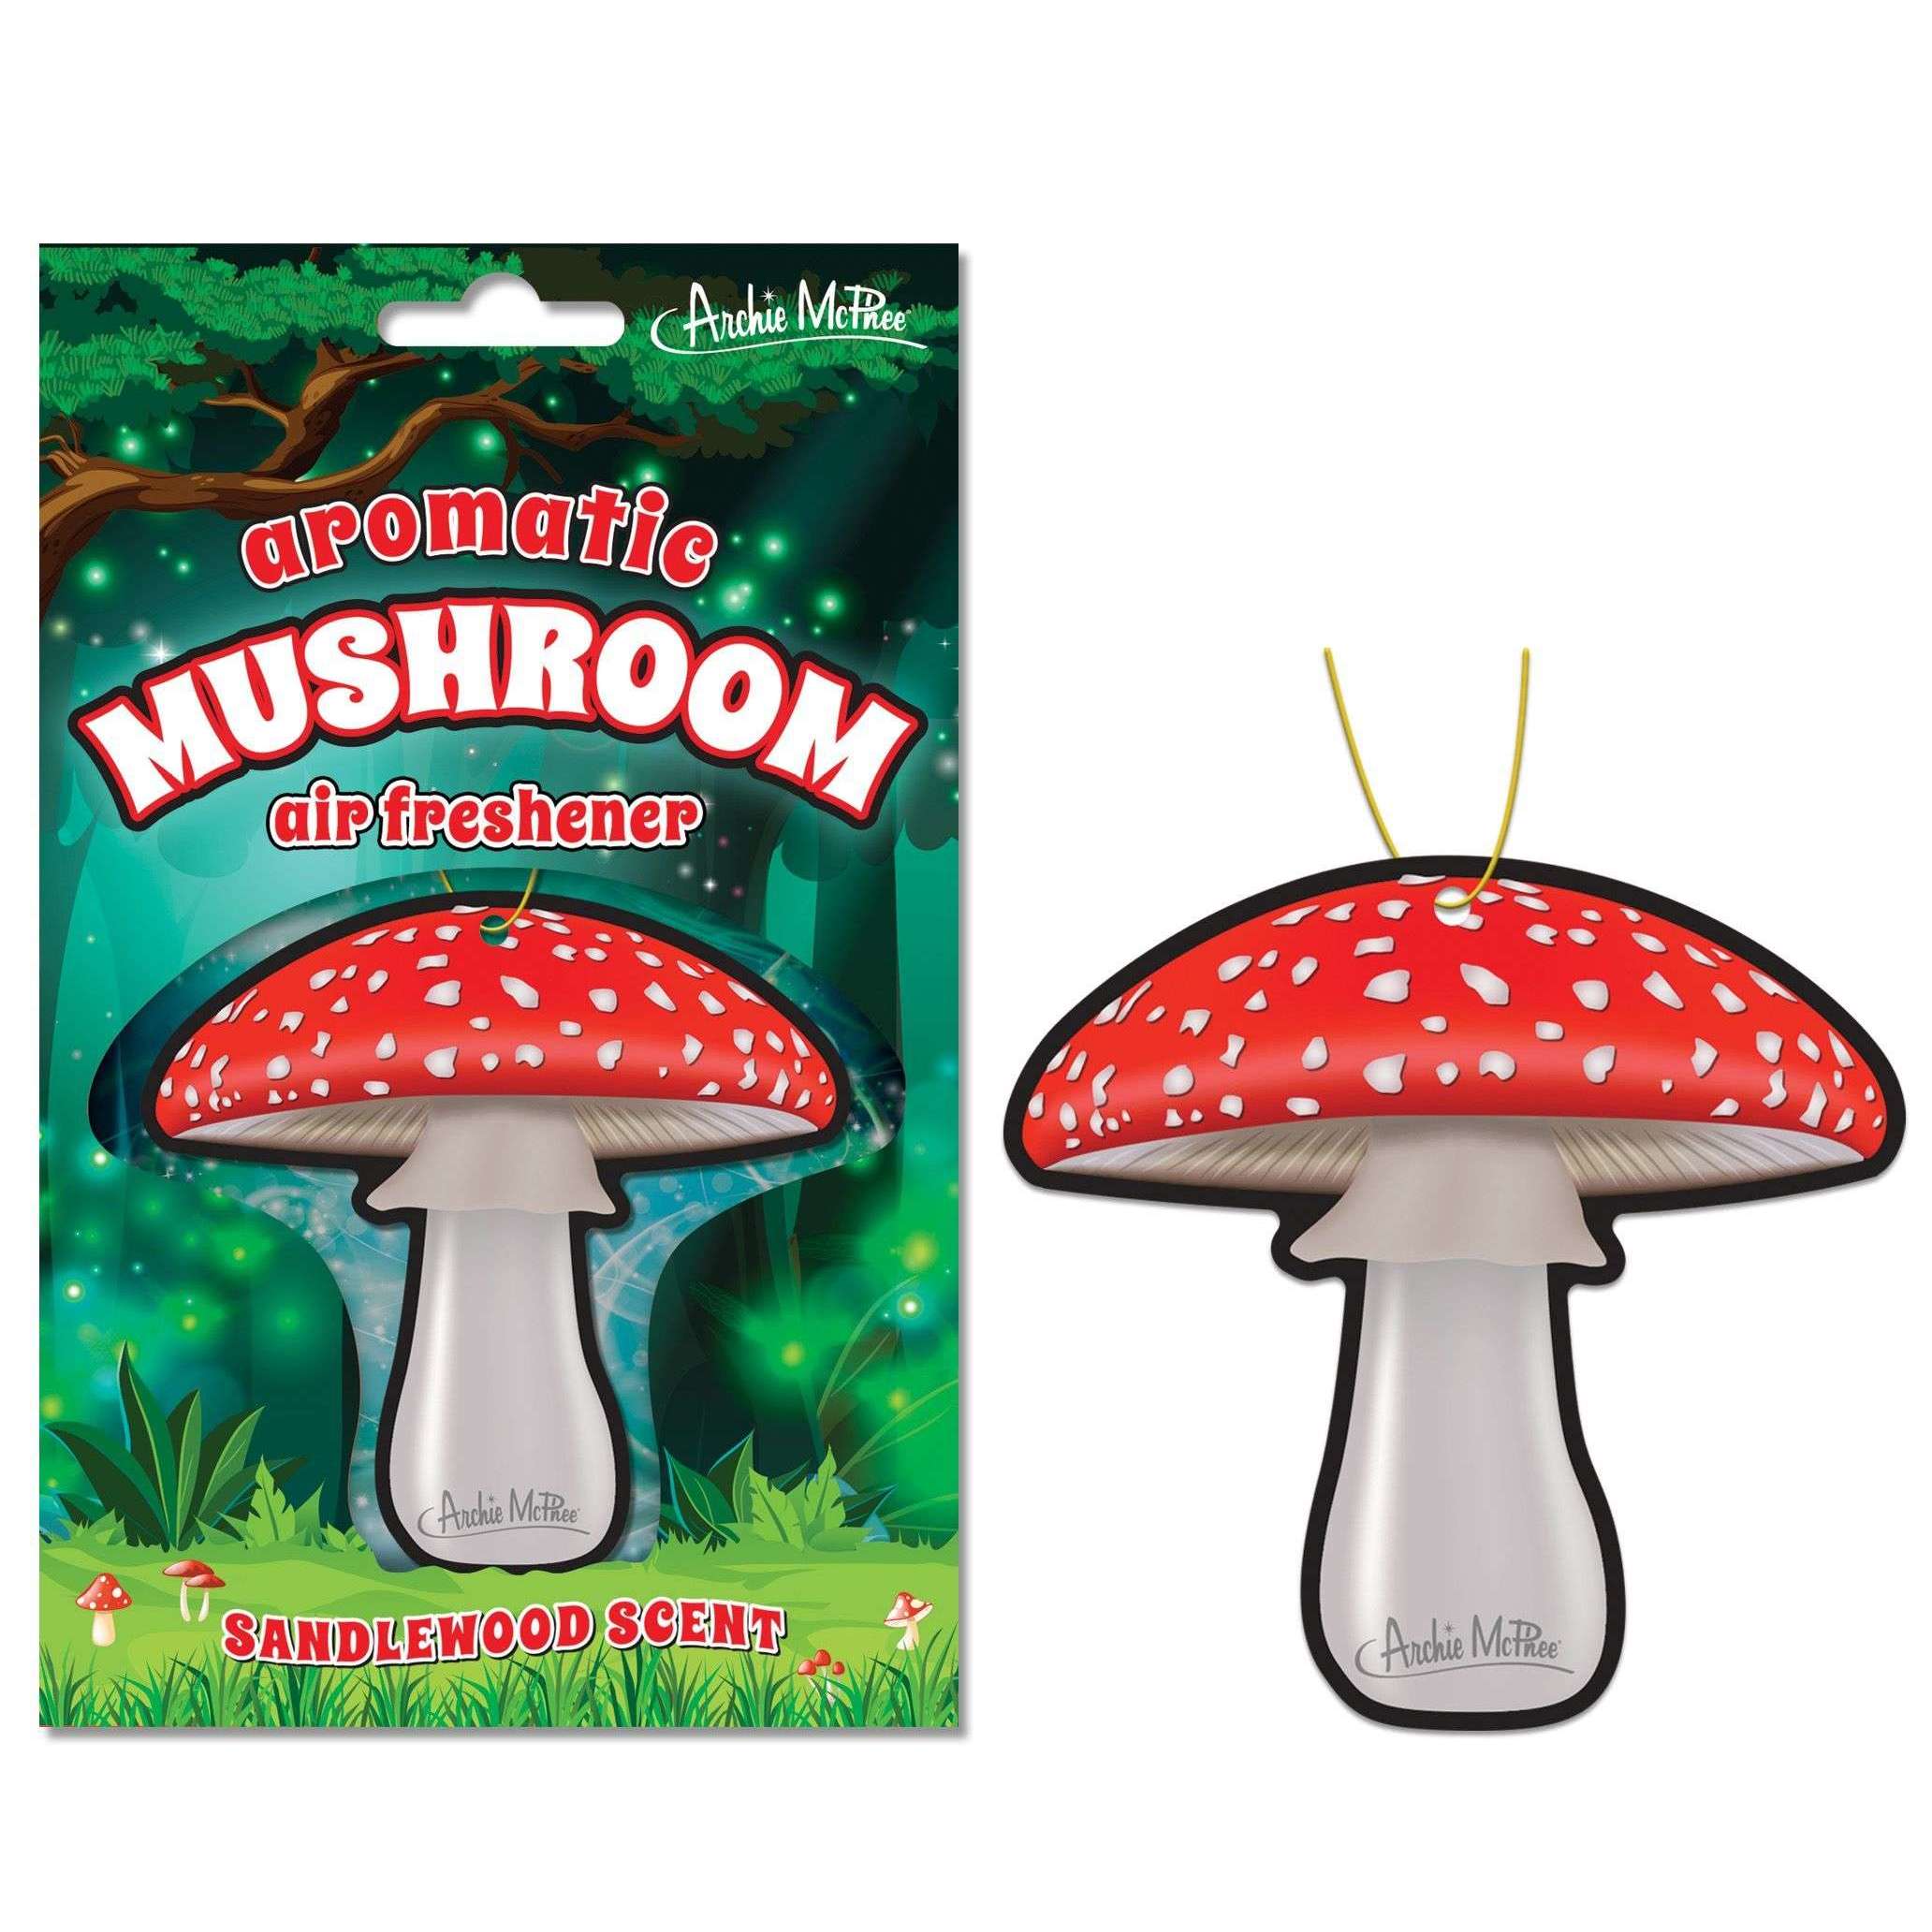 Aromatic Mushroom Sandalwood Scented Air Freshener